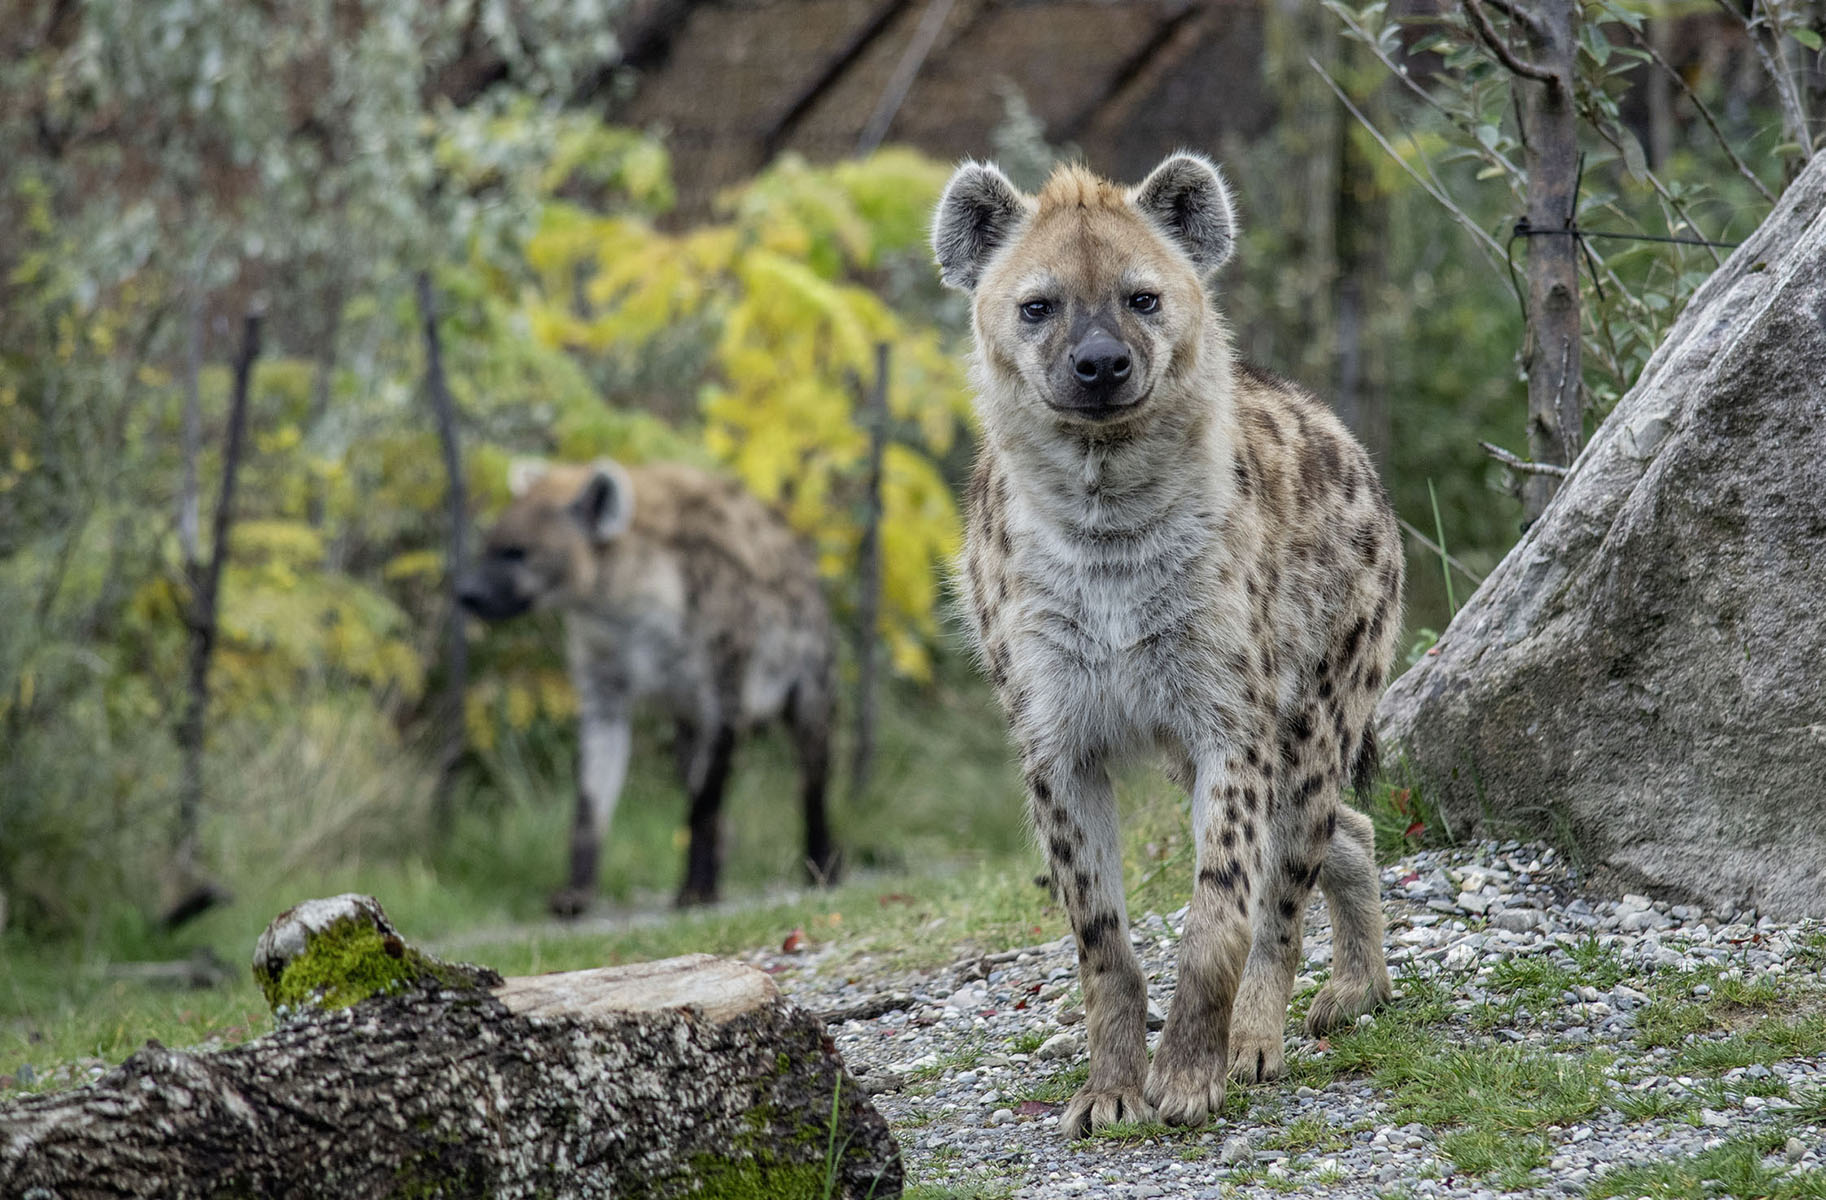 The spotted hyenas Masangao and Tesi (image: Nicky Kaufmann / Zoo Zurich)